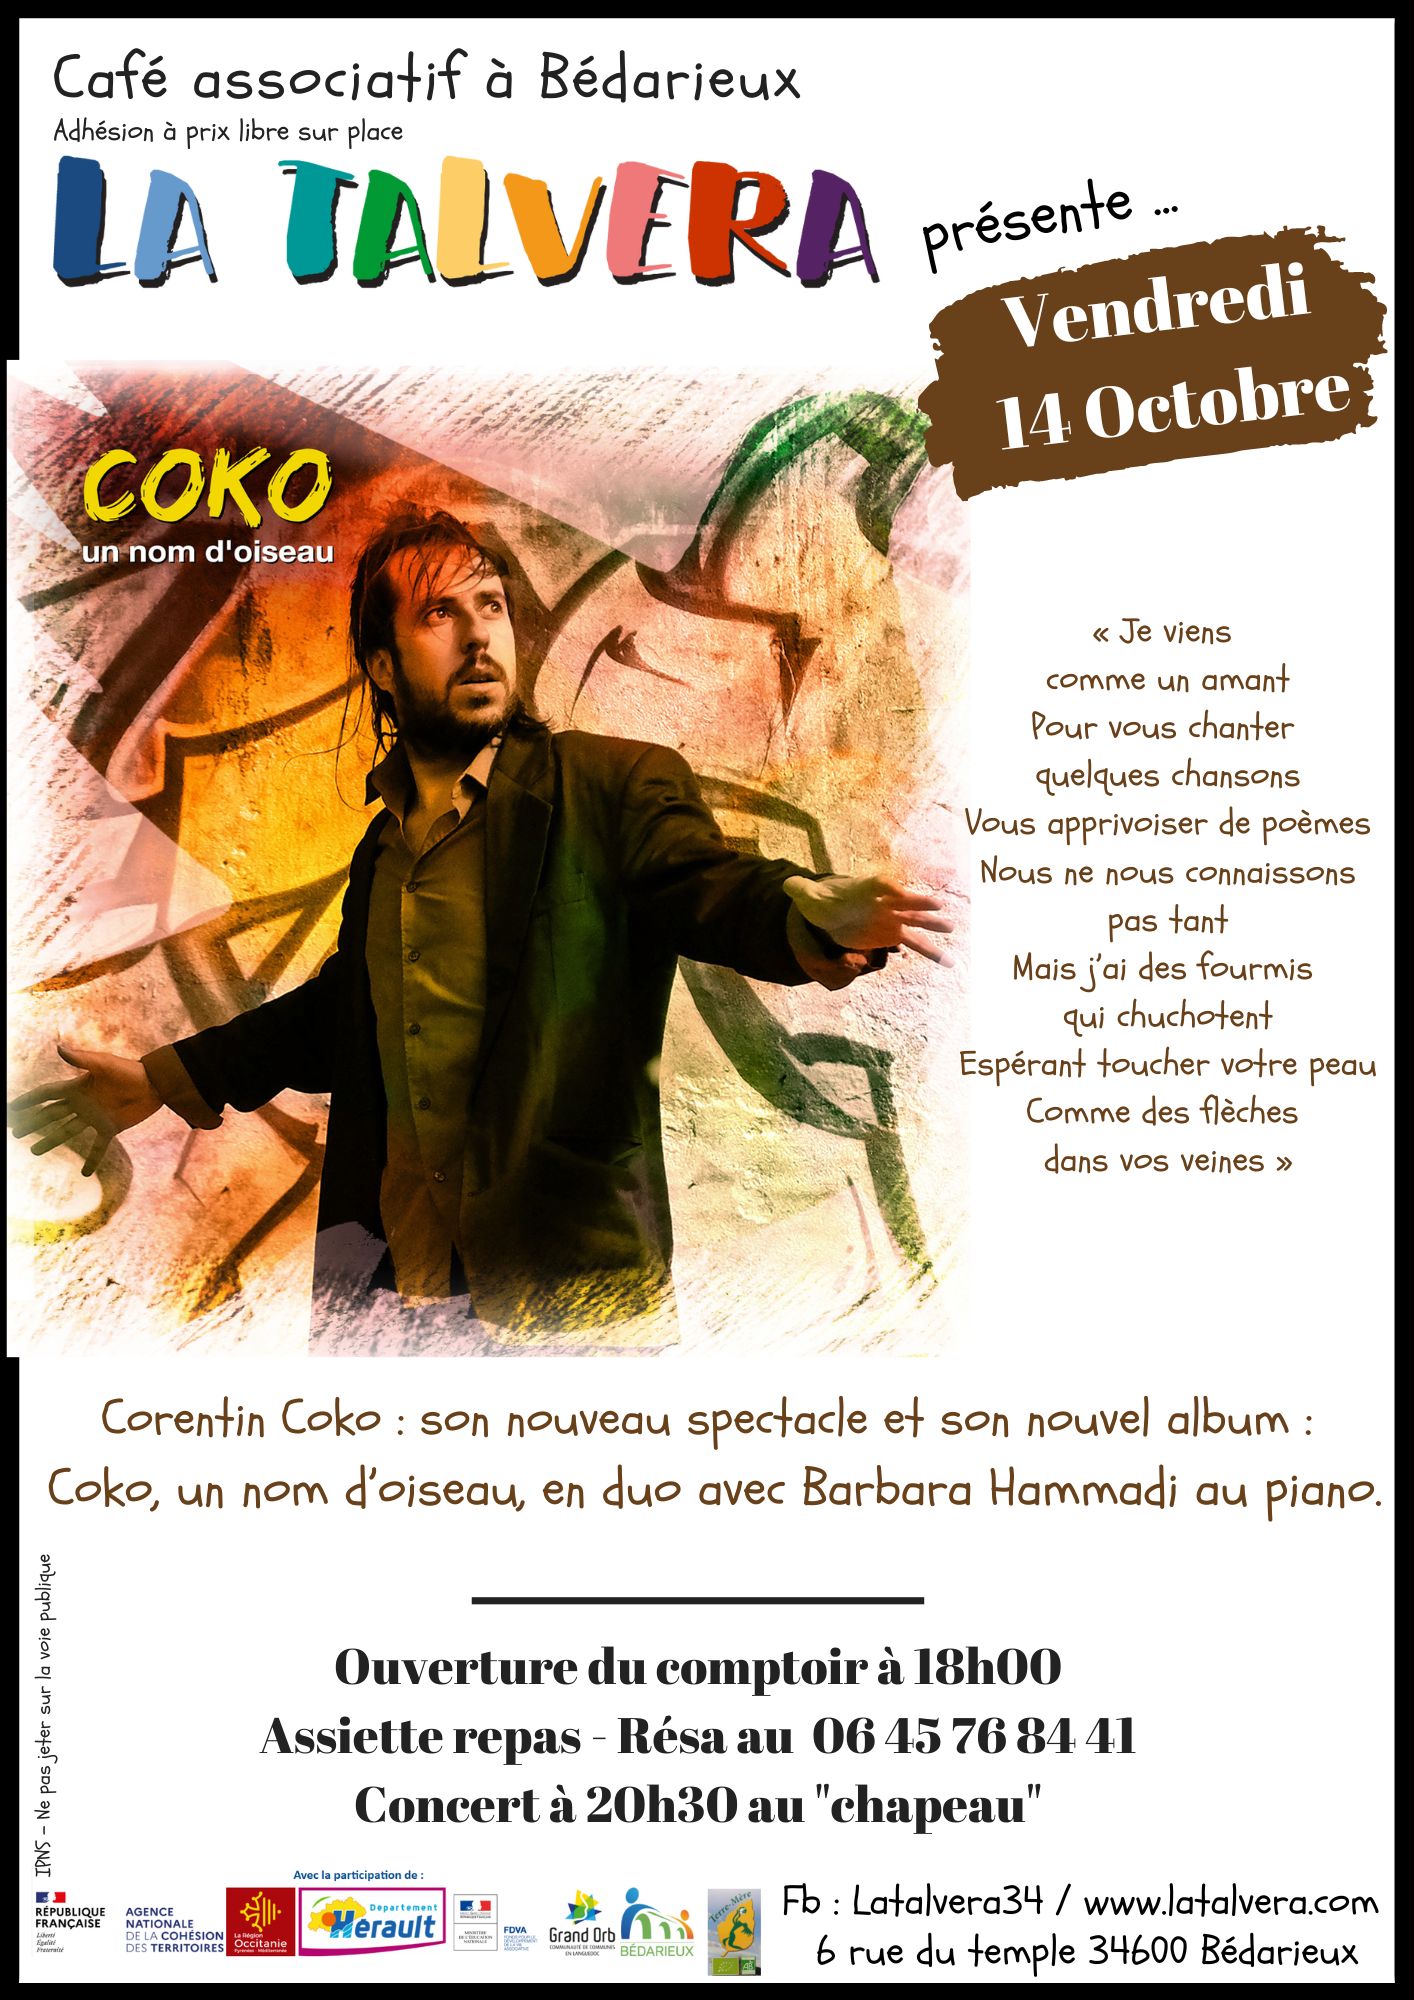 CONCERT : Coko, un nom d’oiseau, en duo avec Barbara Hammadi au piano.